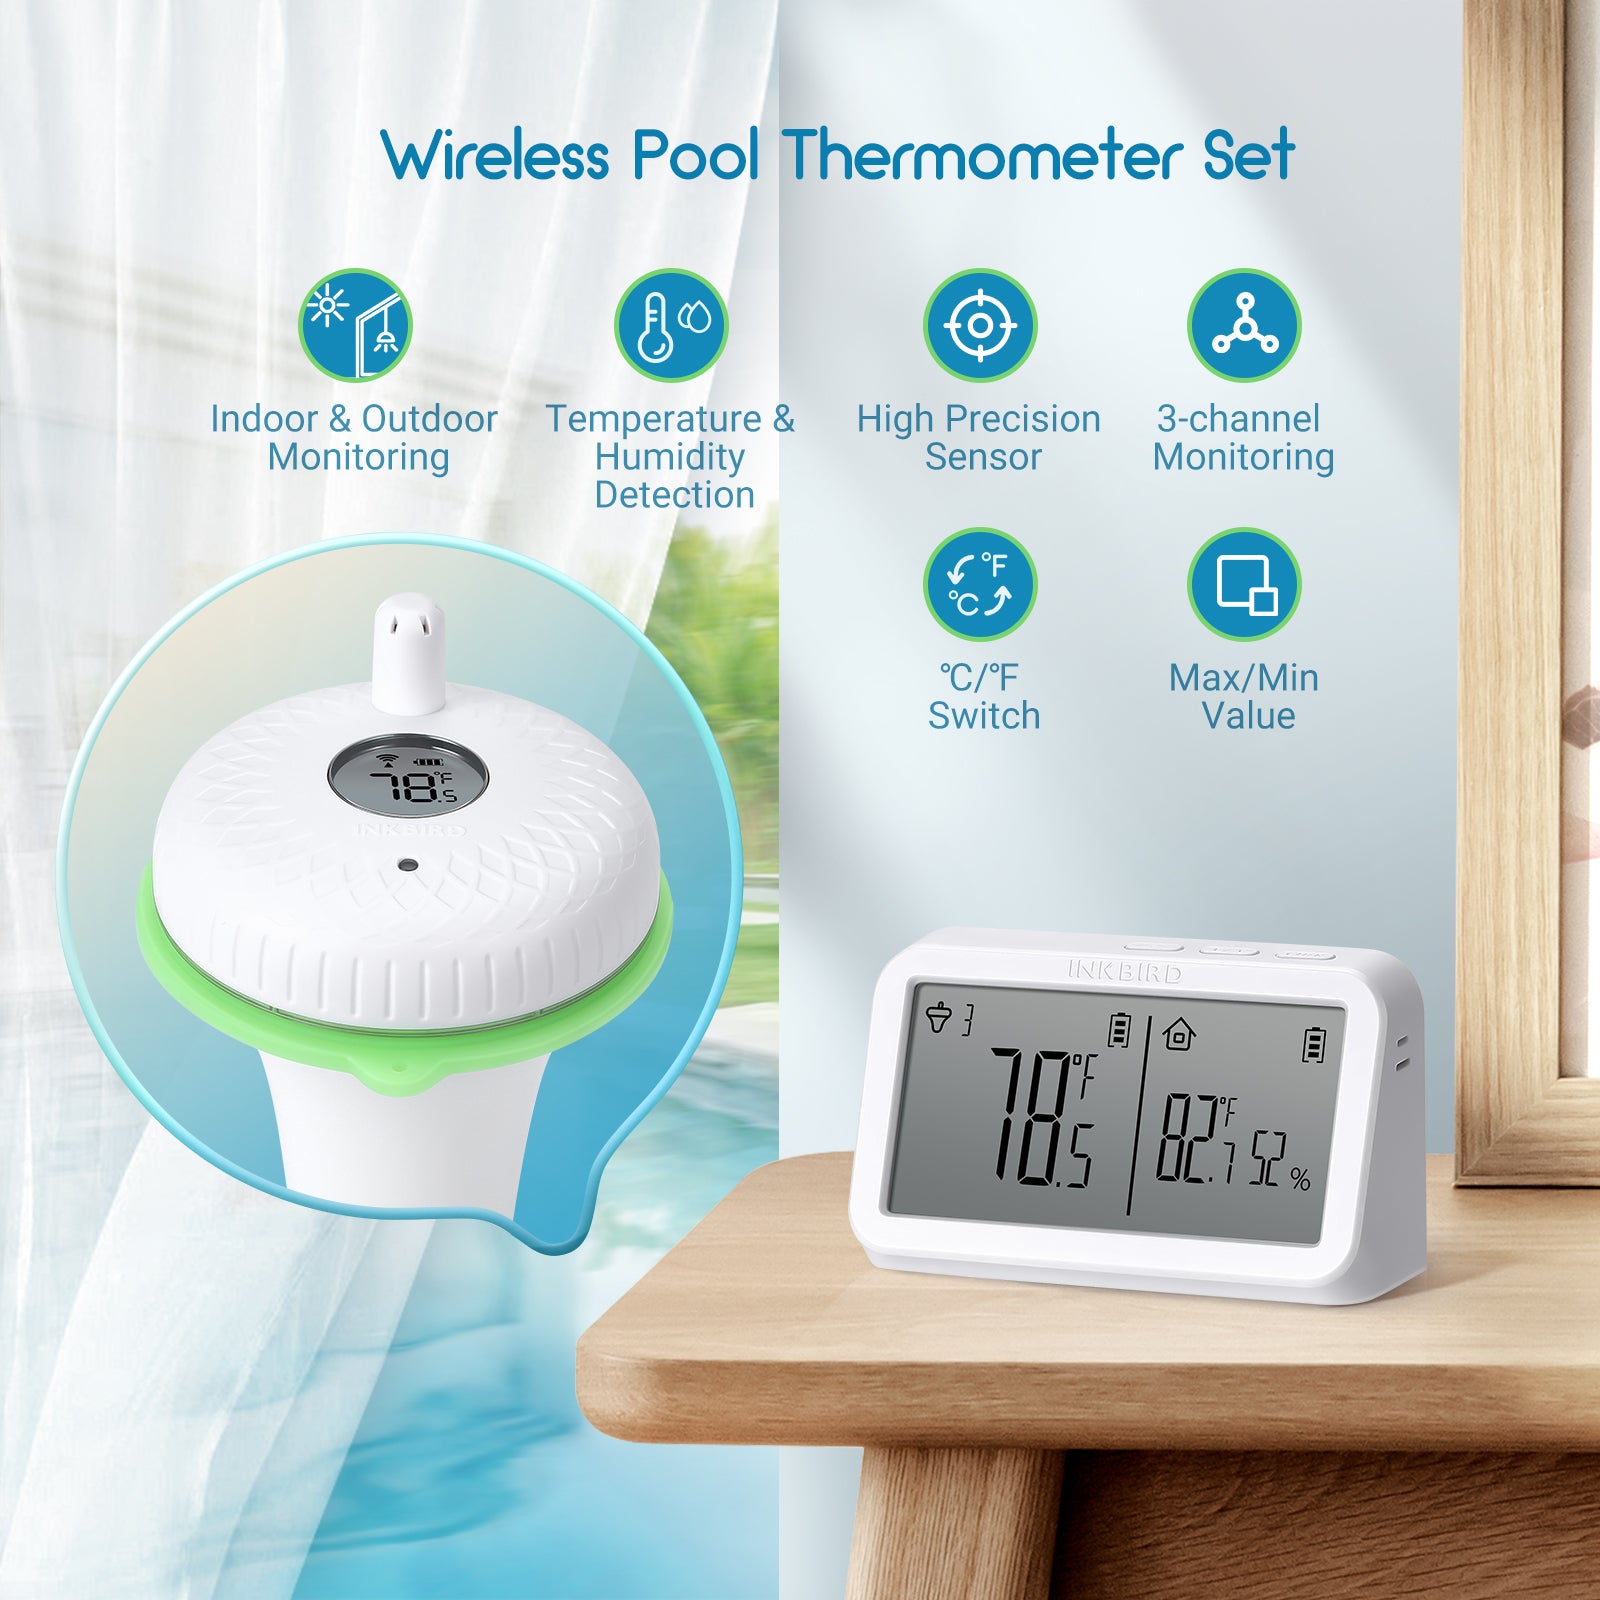 INKBIRD pool thermometer